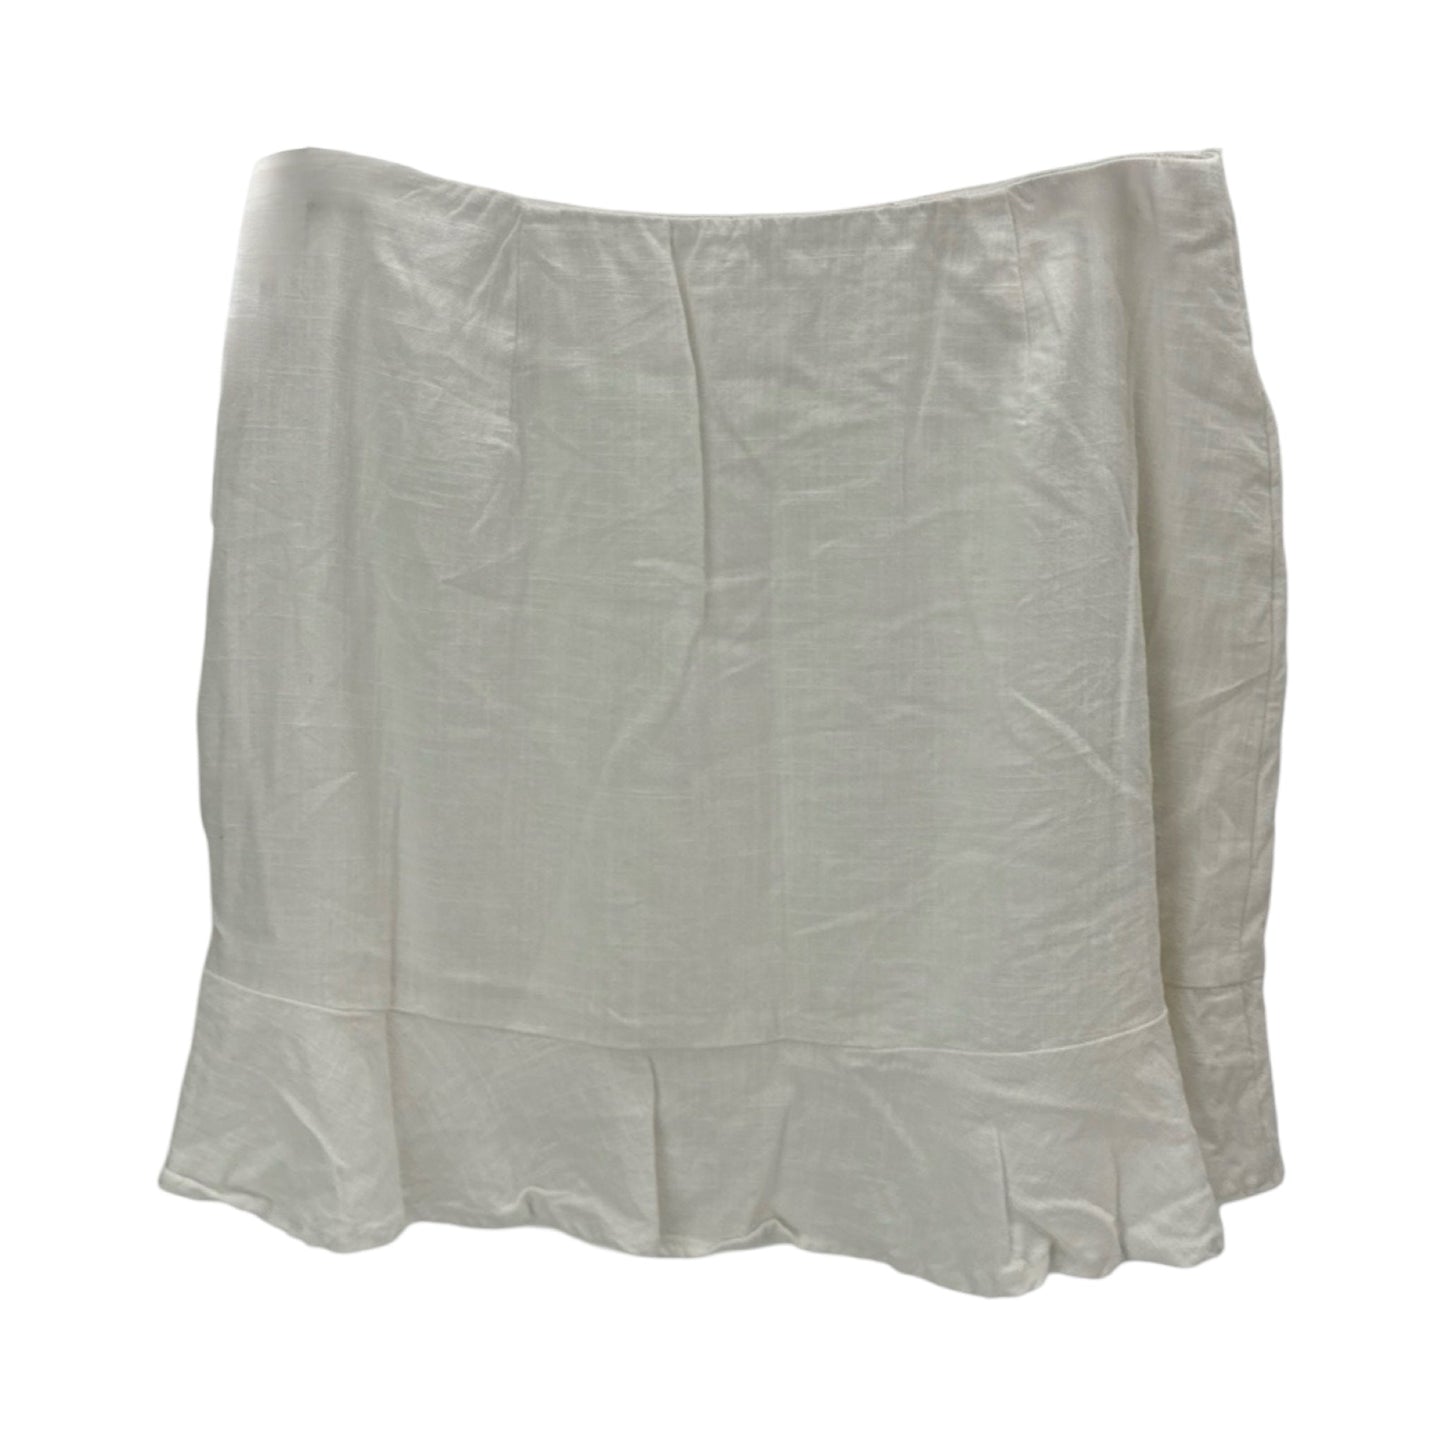 White Skirt Mini & Short Cotton Candy, Size M